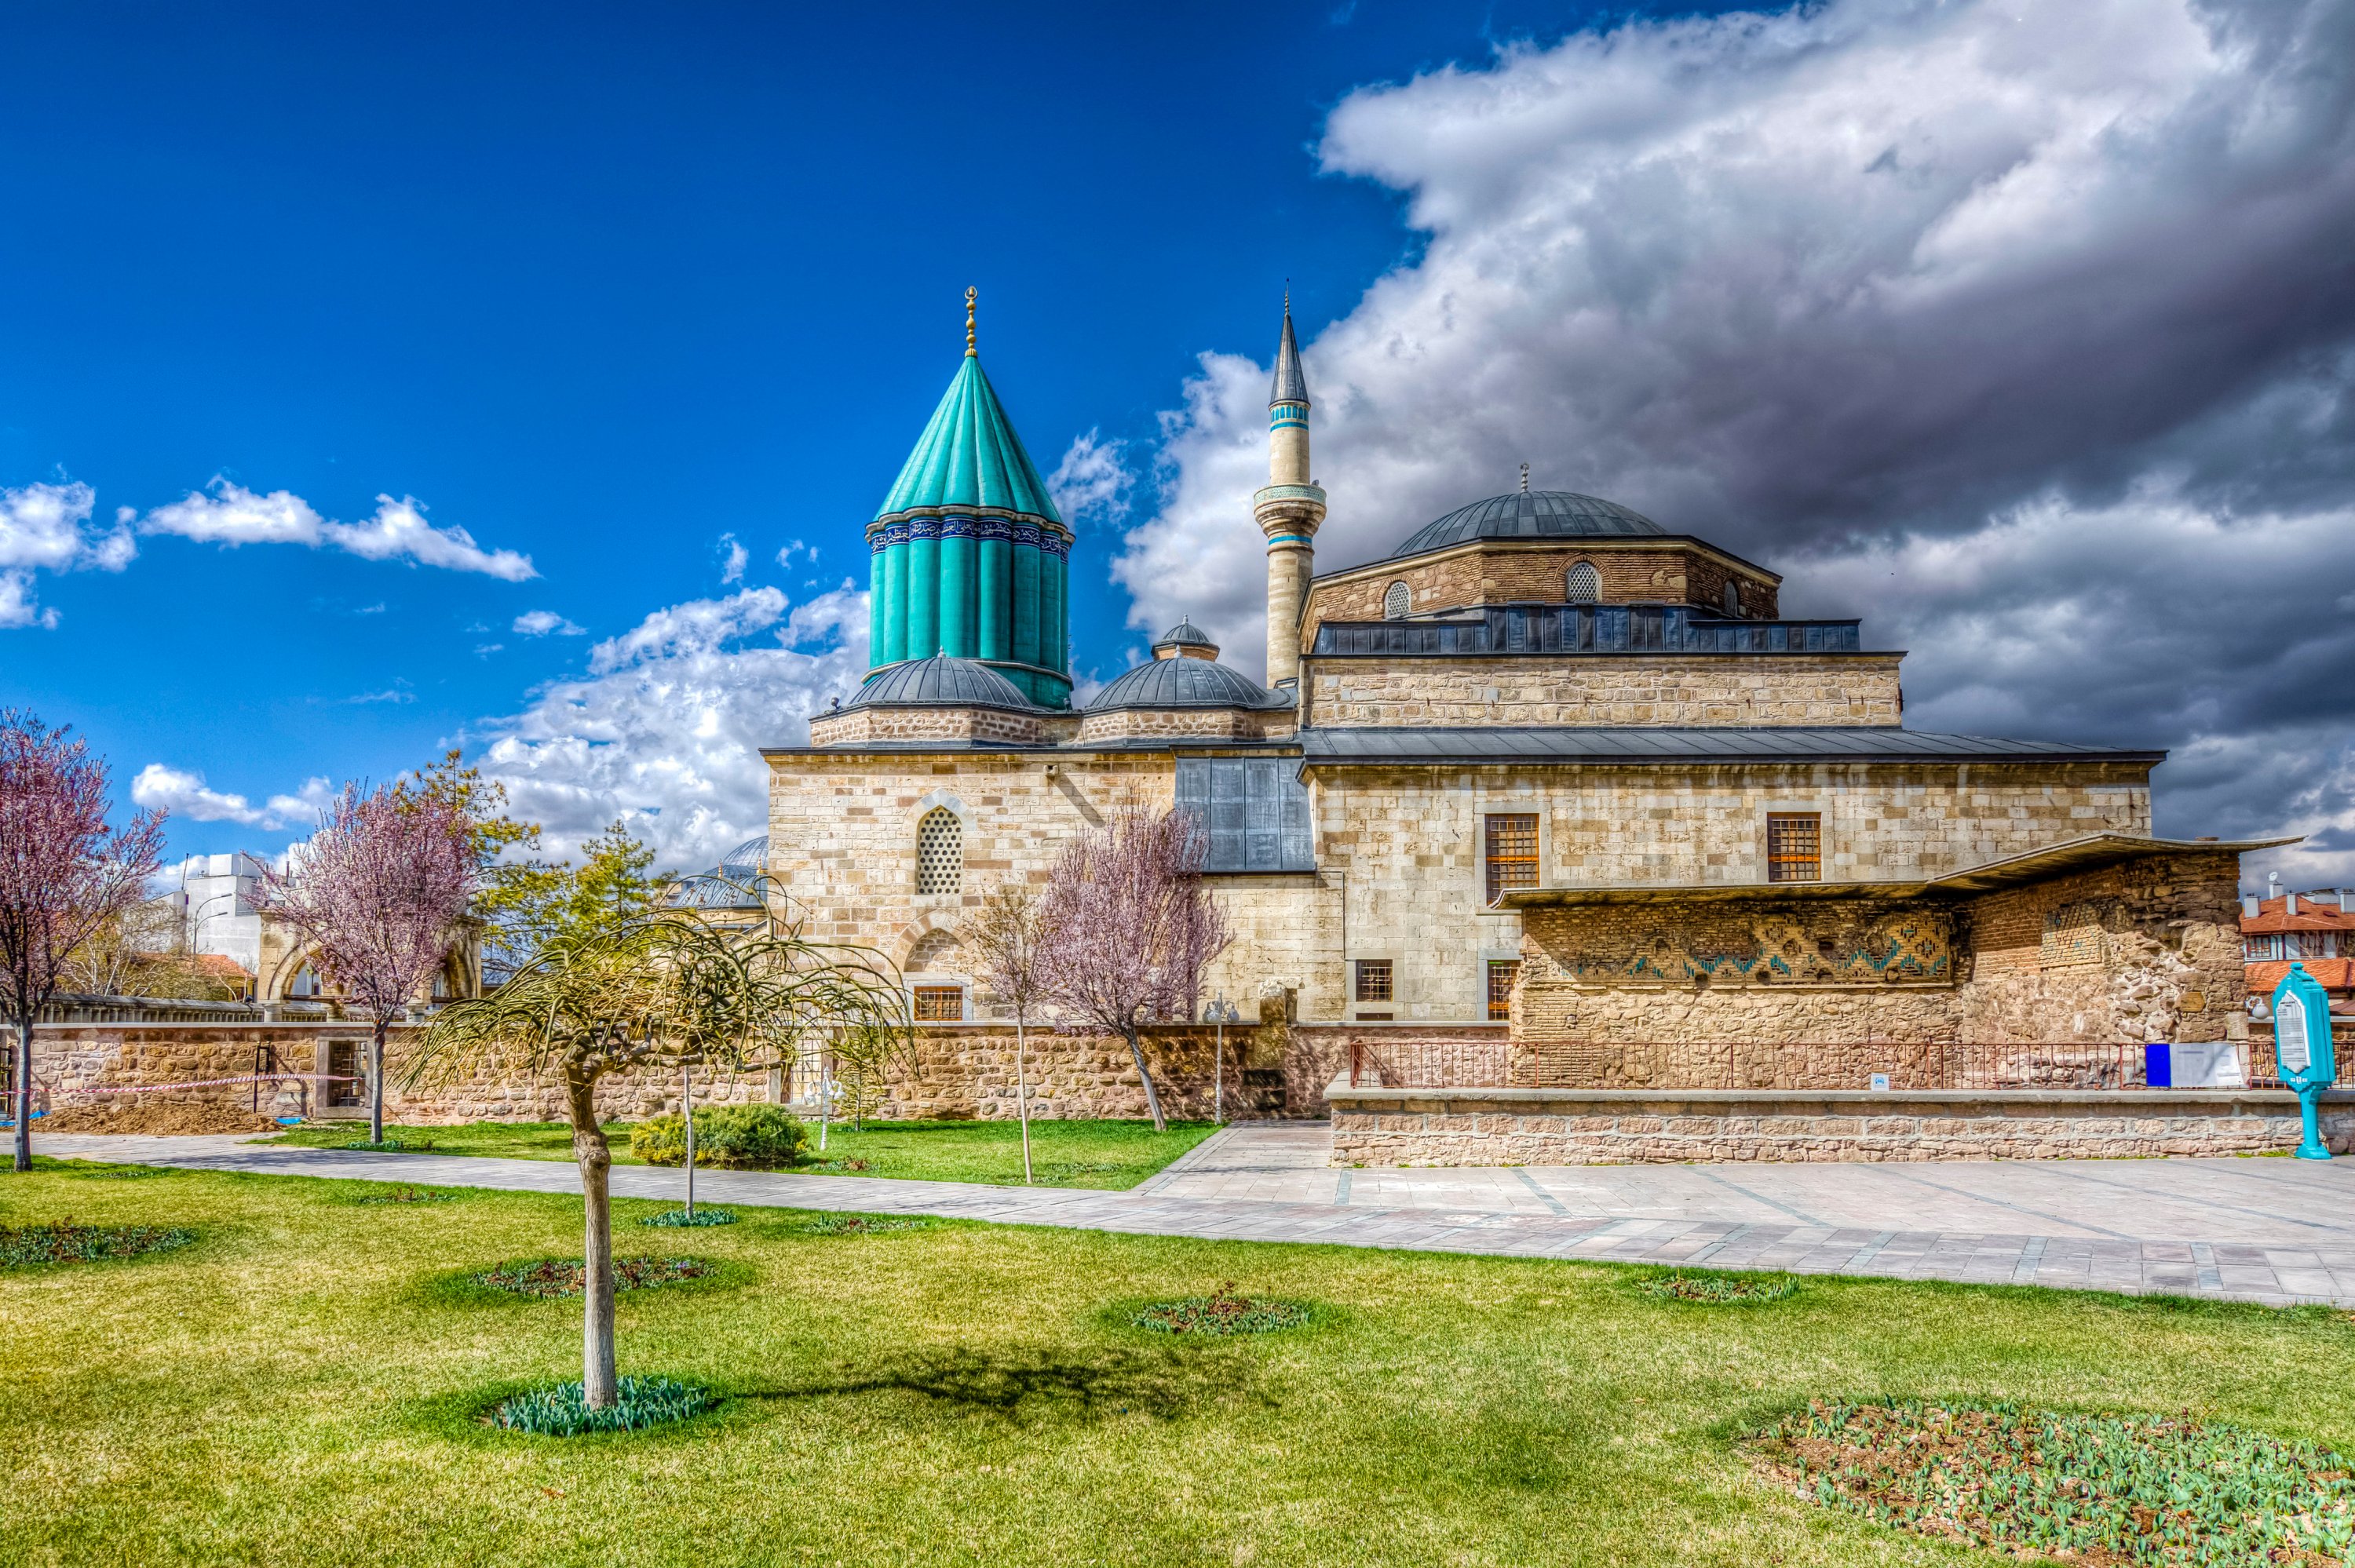  Mevlana Museum - Mausoleum of Jalal ad-Din Muhammad Rumi